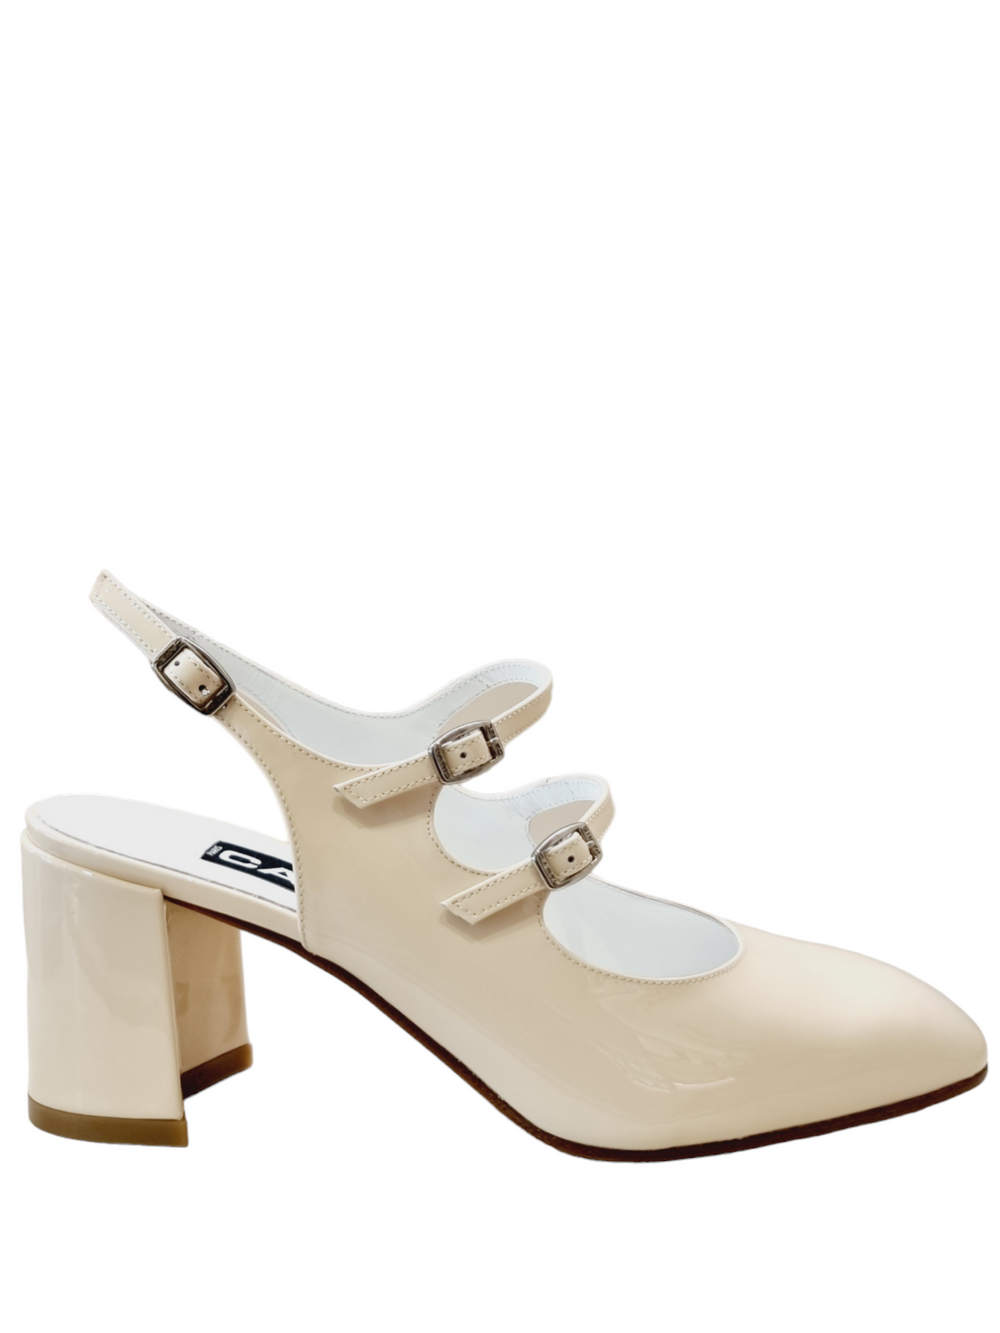 Banana Ivory Patent Mary Jane - Carel Paris - Liberty Shoes Australia